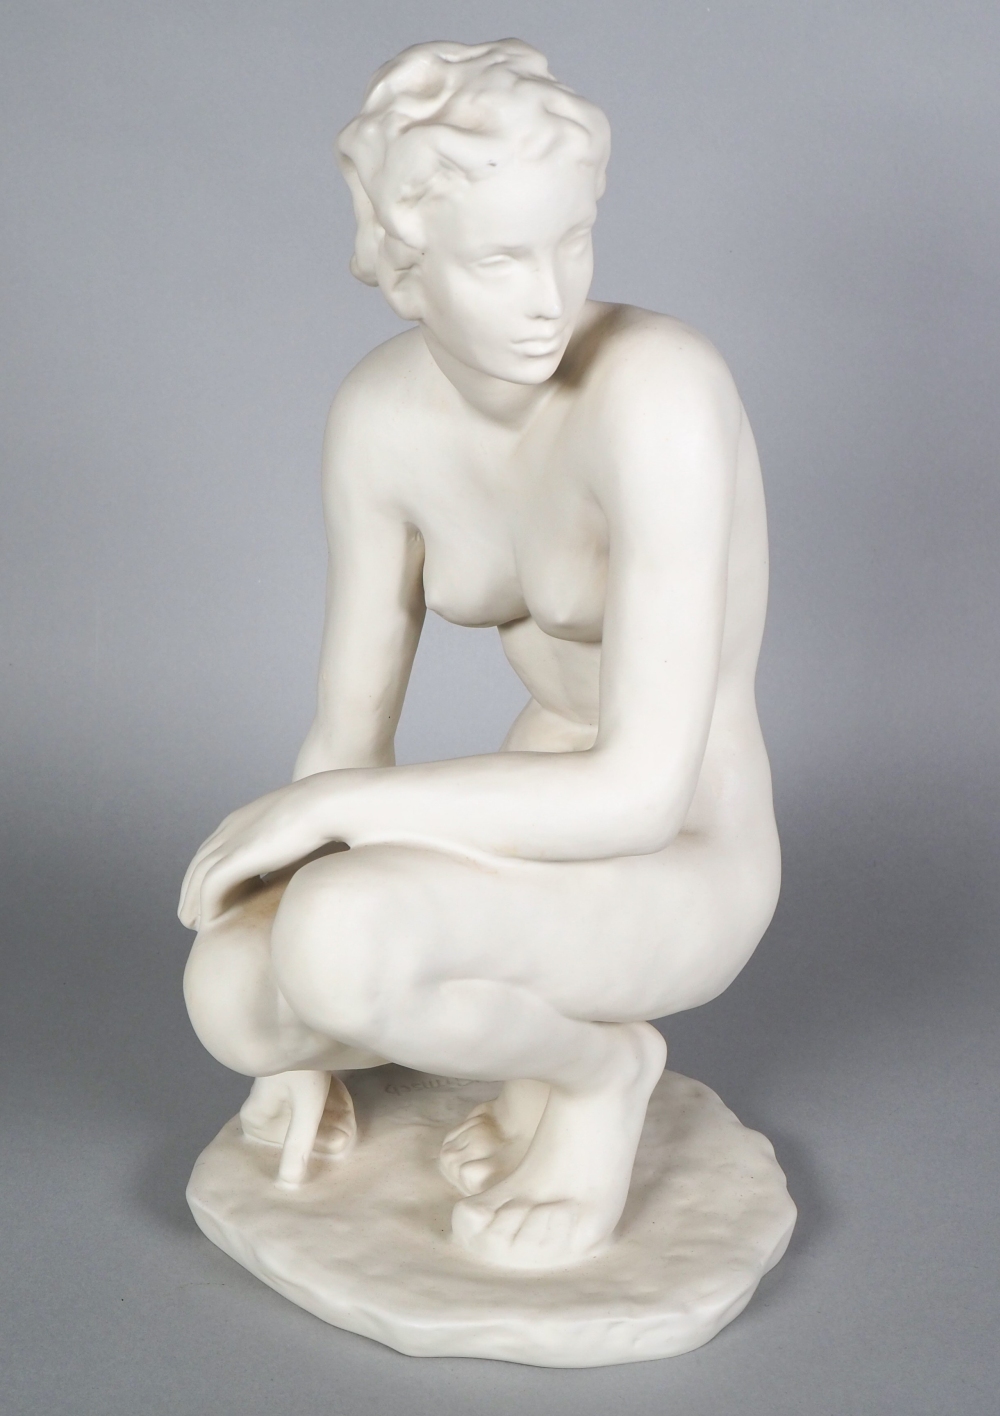 Rosenthal, porcelain figurine "The Squatting Woman", around 1938